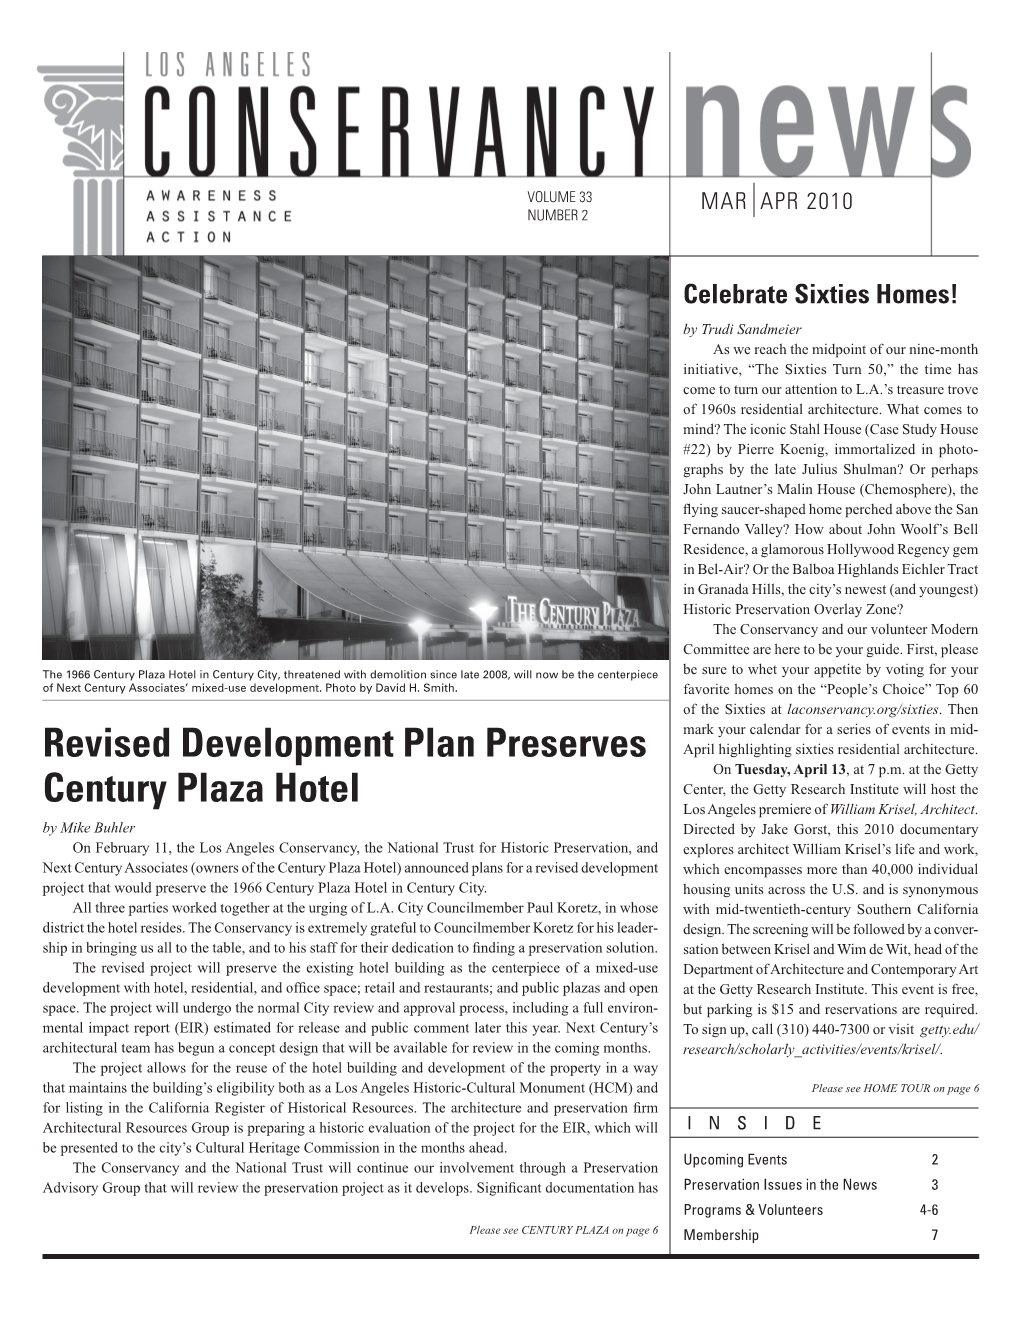 Revised Development Plan Preserves Century Plaza Hotel